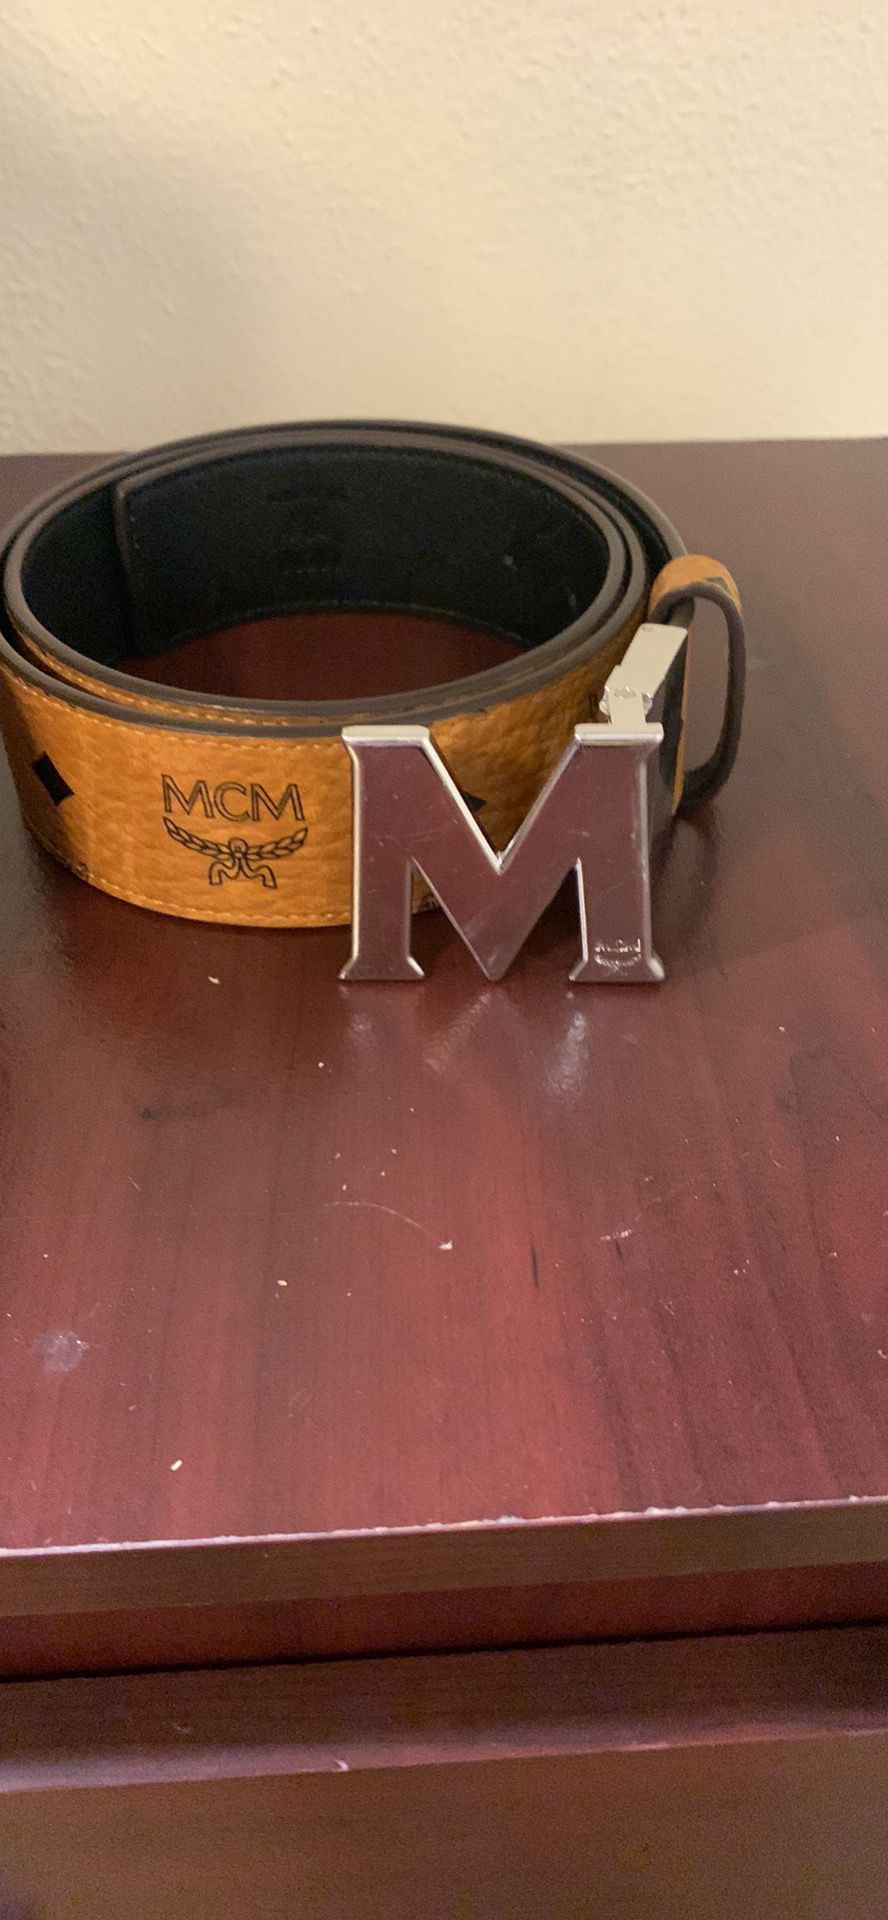 MCM belt